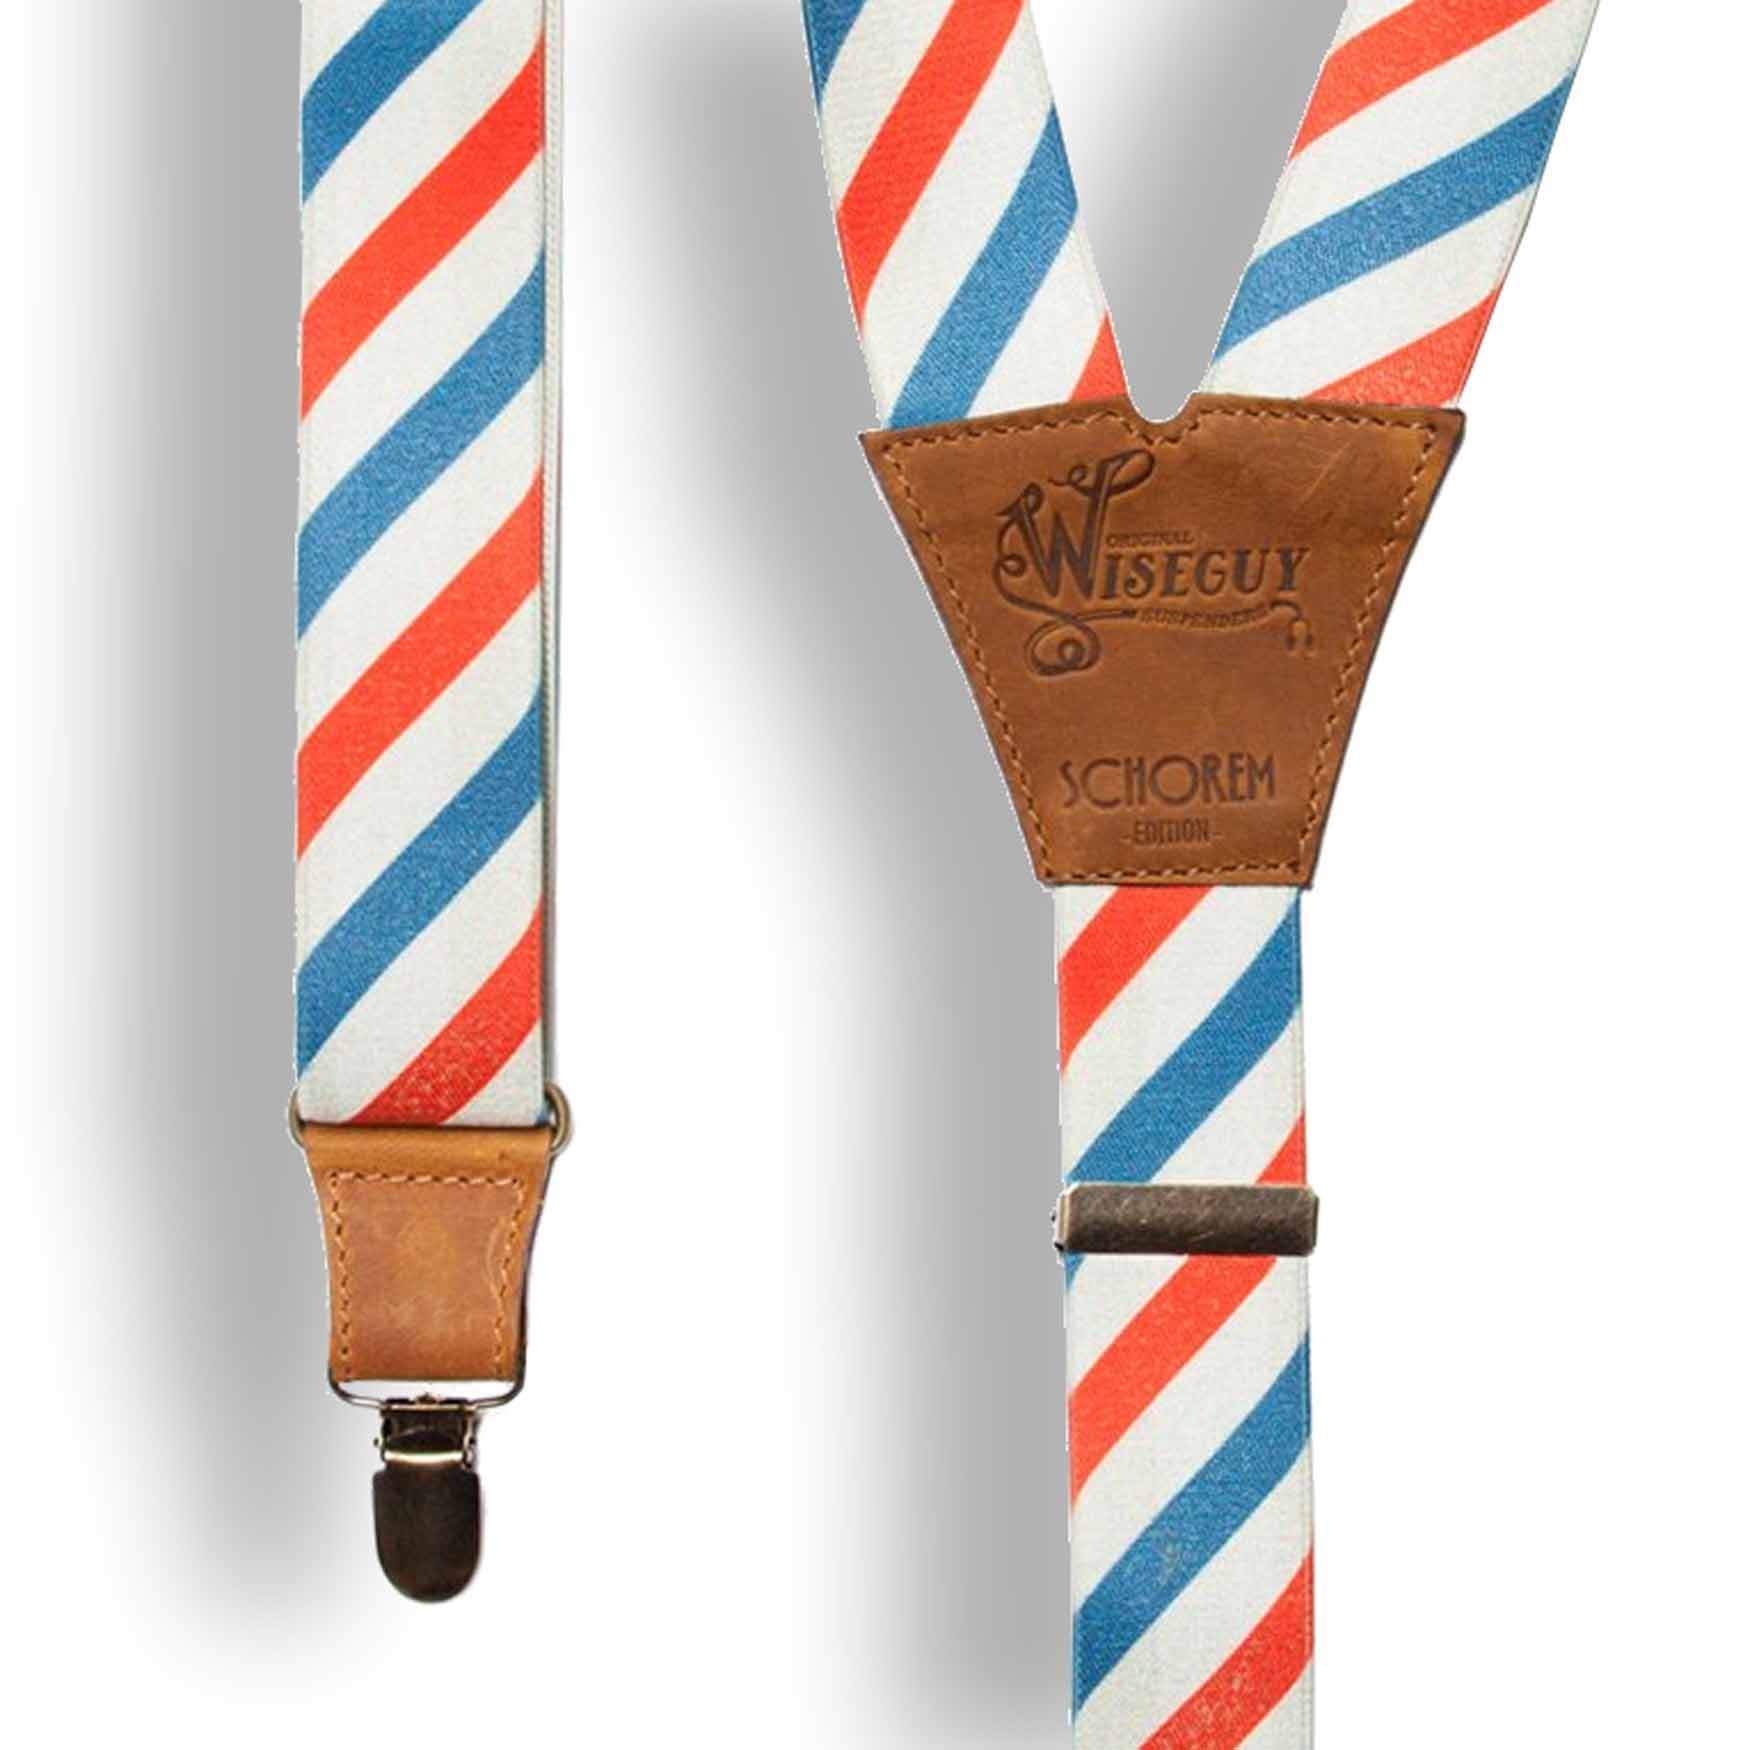 Schorem Vintage Suspenders Elastic wide 1.3 inch - Wiseguy Suspenders